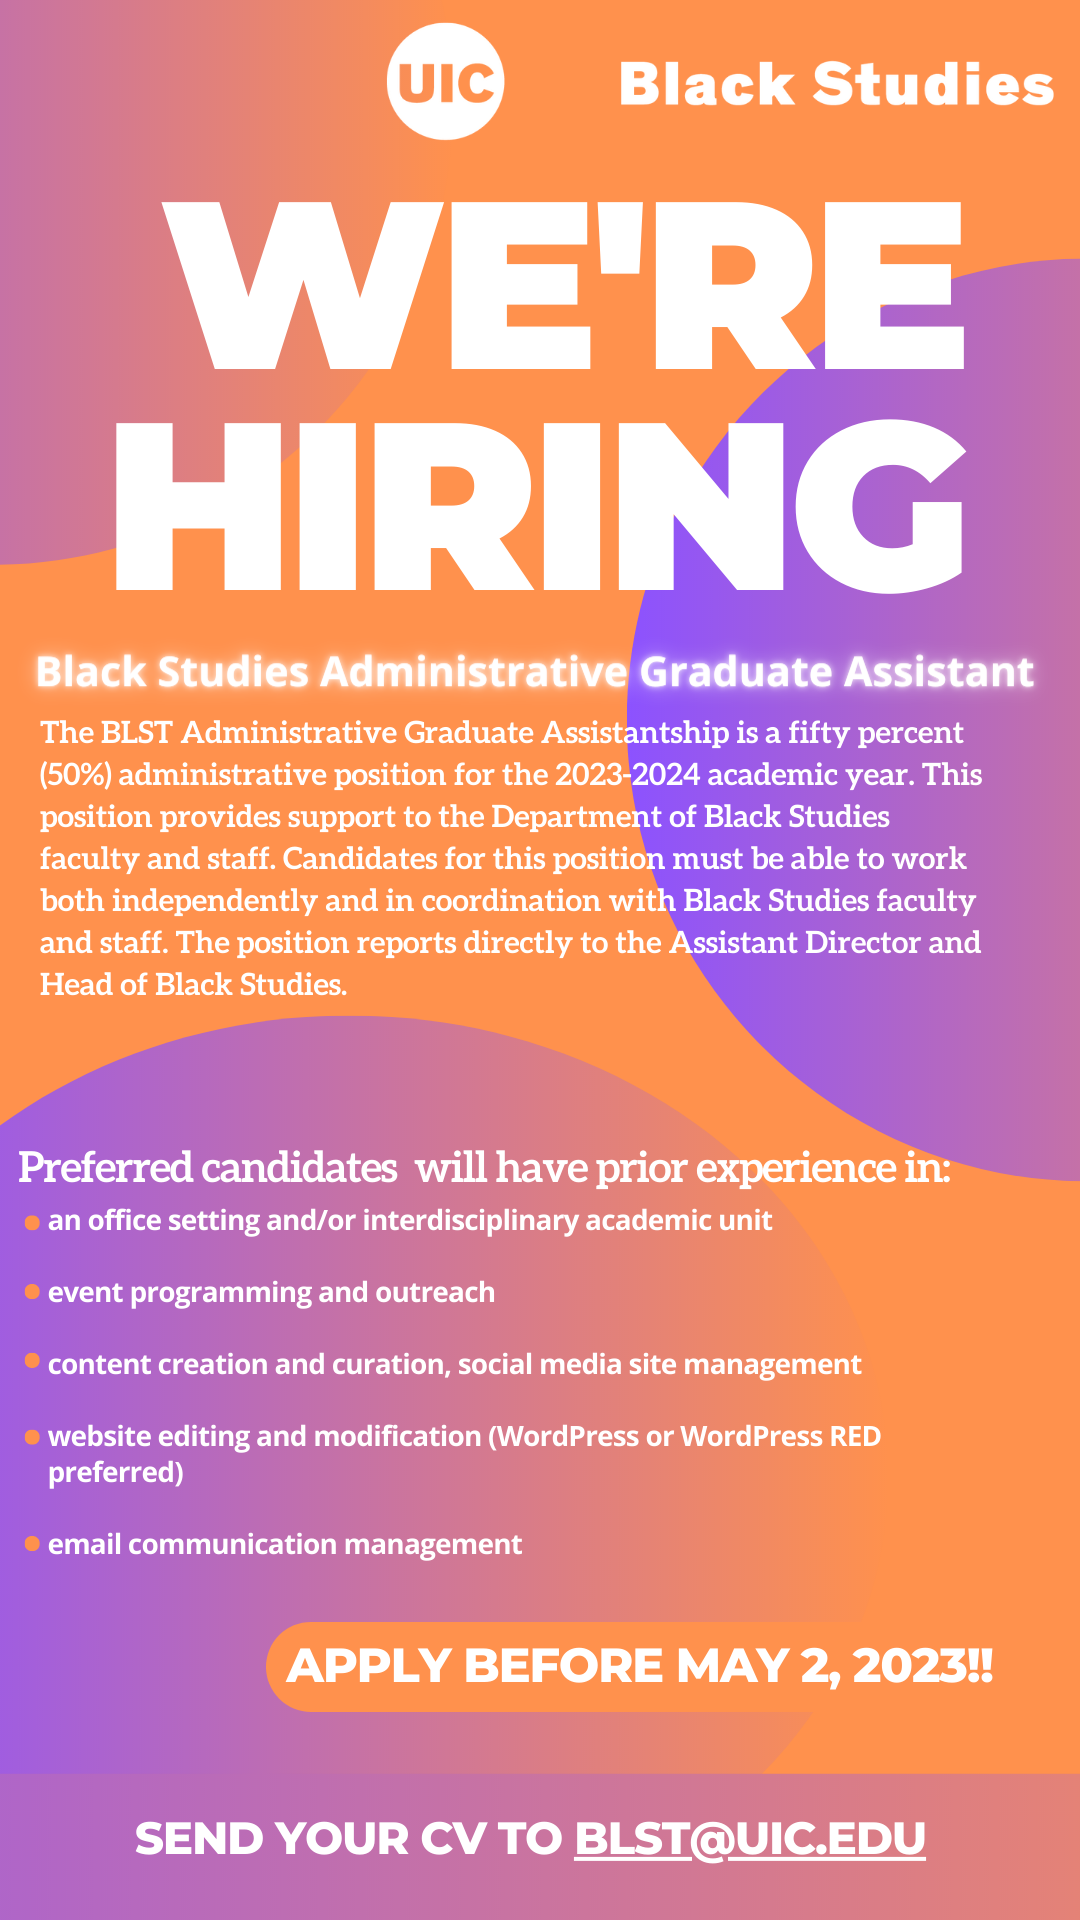 orange and purple flyer advertising 50% administrative GA position in Black Studies.